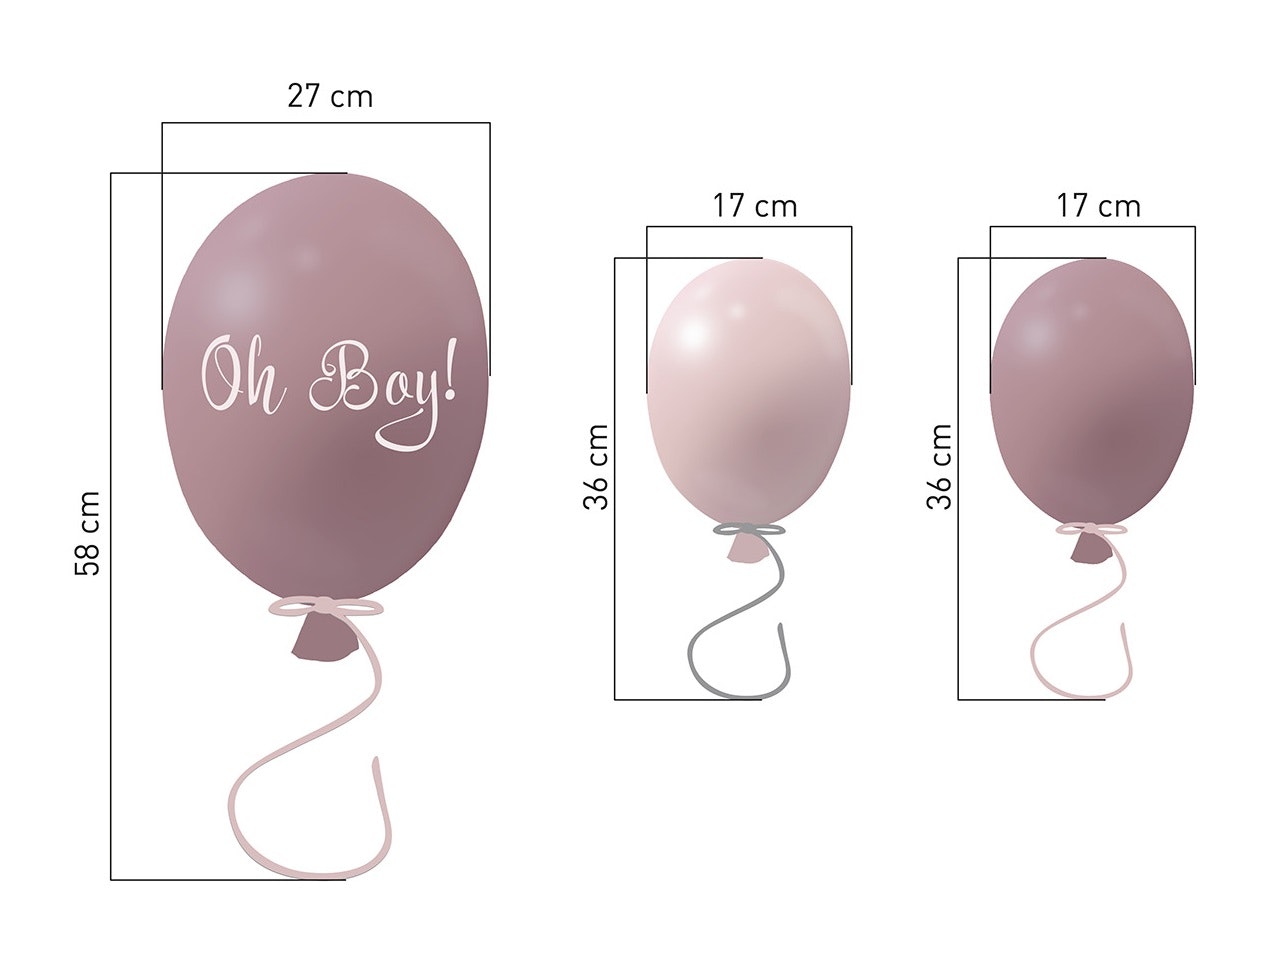 Väggklistermärke partyballonger 3-pack, dusty pink Mått på ballonger